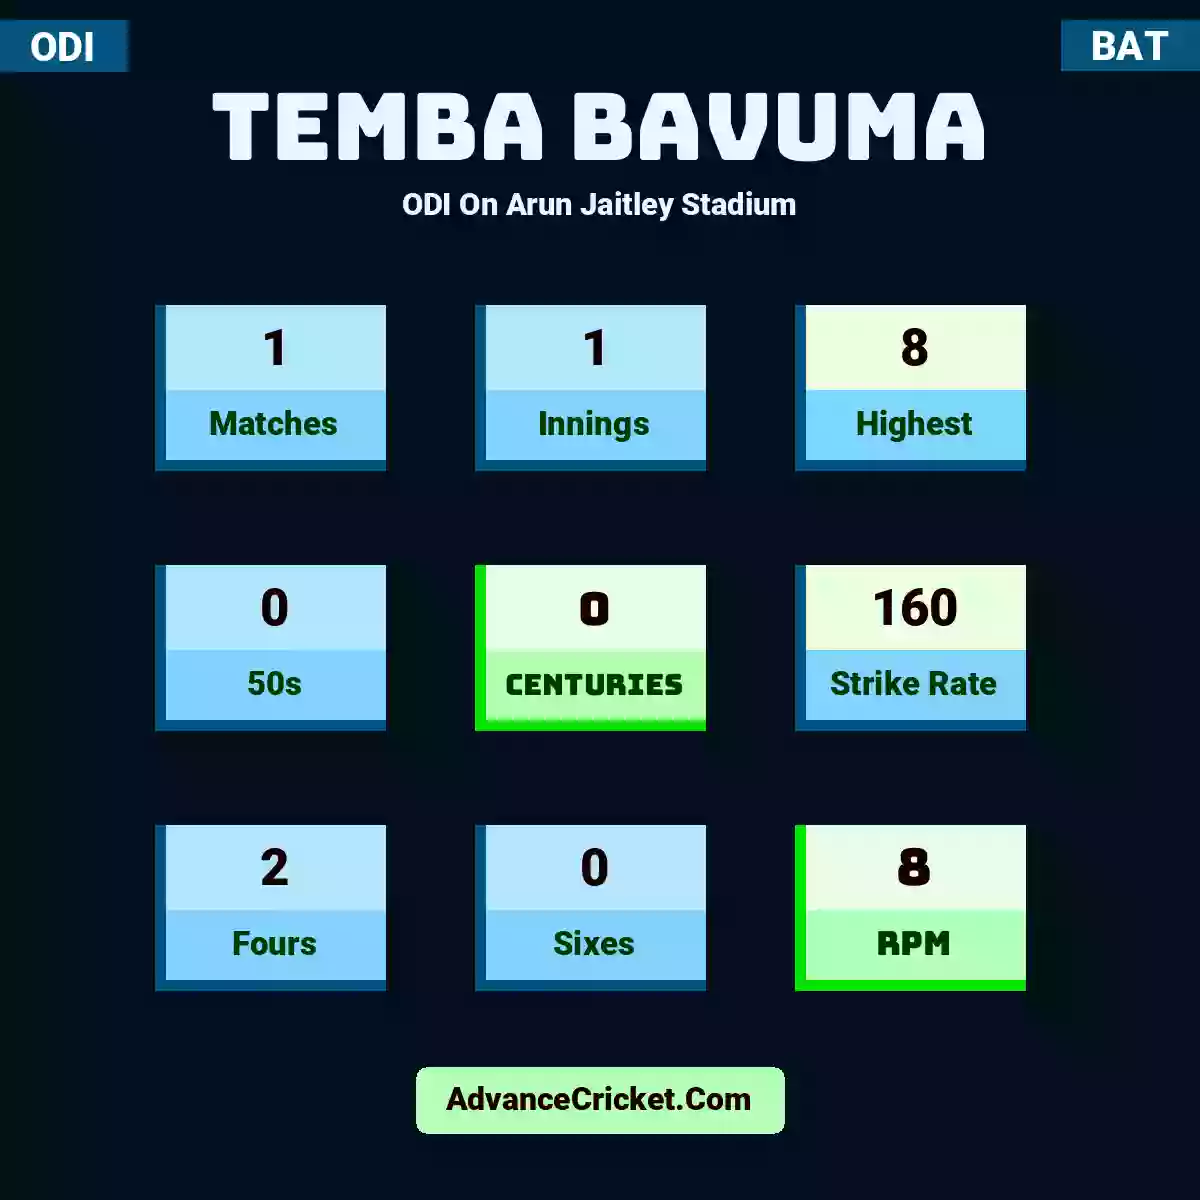 Temba Bavuma ODI  On Arun Jaitley Stadium, Temba Bavuma played 1 matches, scored 8 runs as highest, 0 half-centuries, and 0 centuries, with a strike rate of 160. T.Bavuma hit 2 fours and 0 sixes, with an RPM of 8.